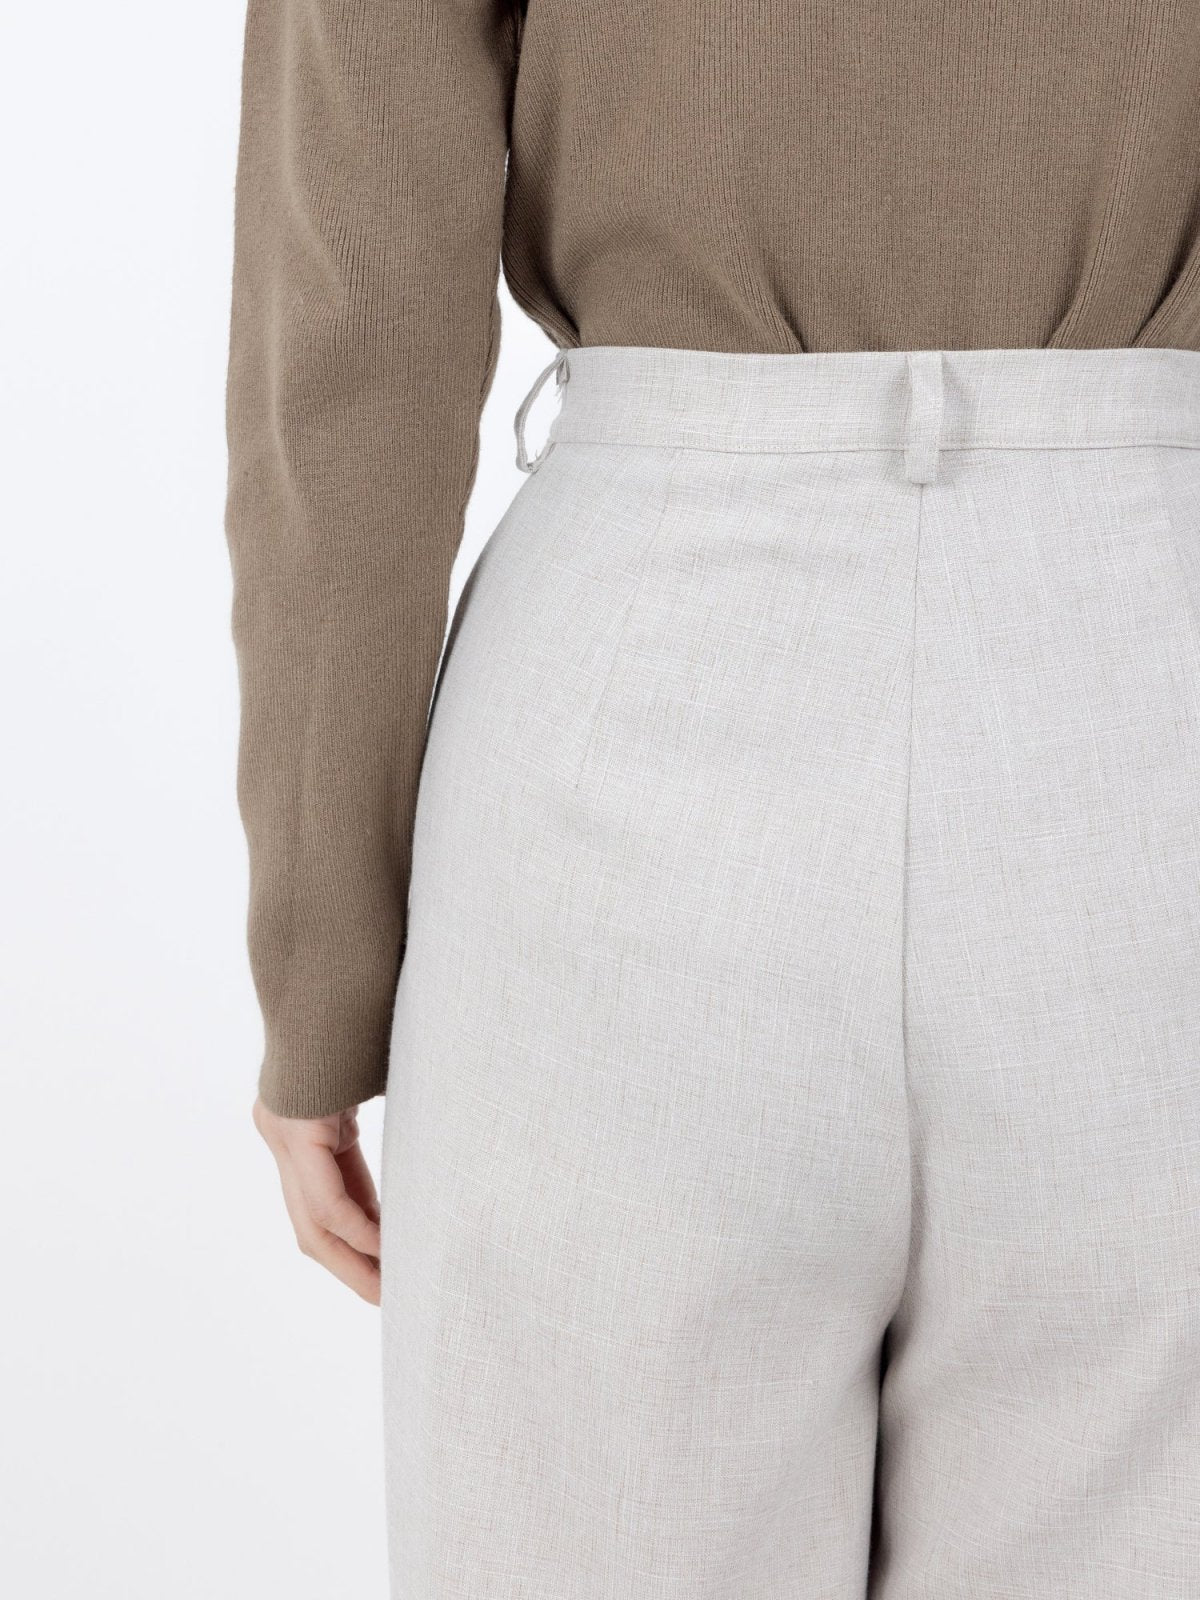 Penny Buttoned Waist Pants - DAG-DD8516-22ChalkS - Gray - S - D'ZAGE Designs